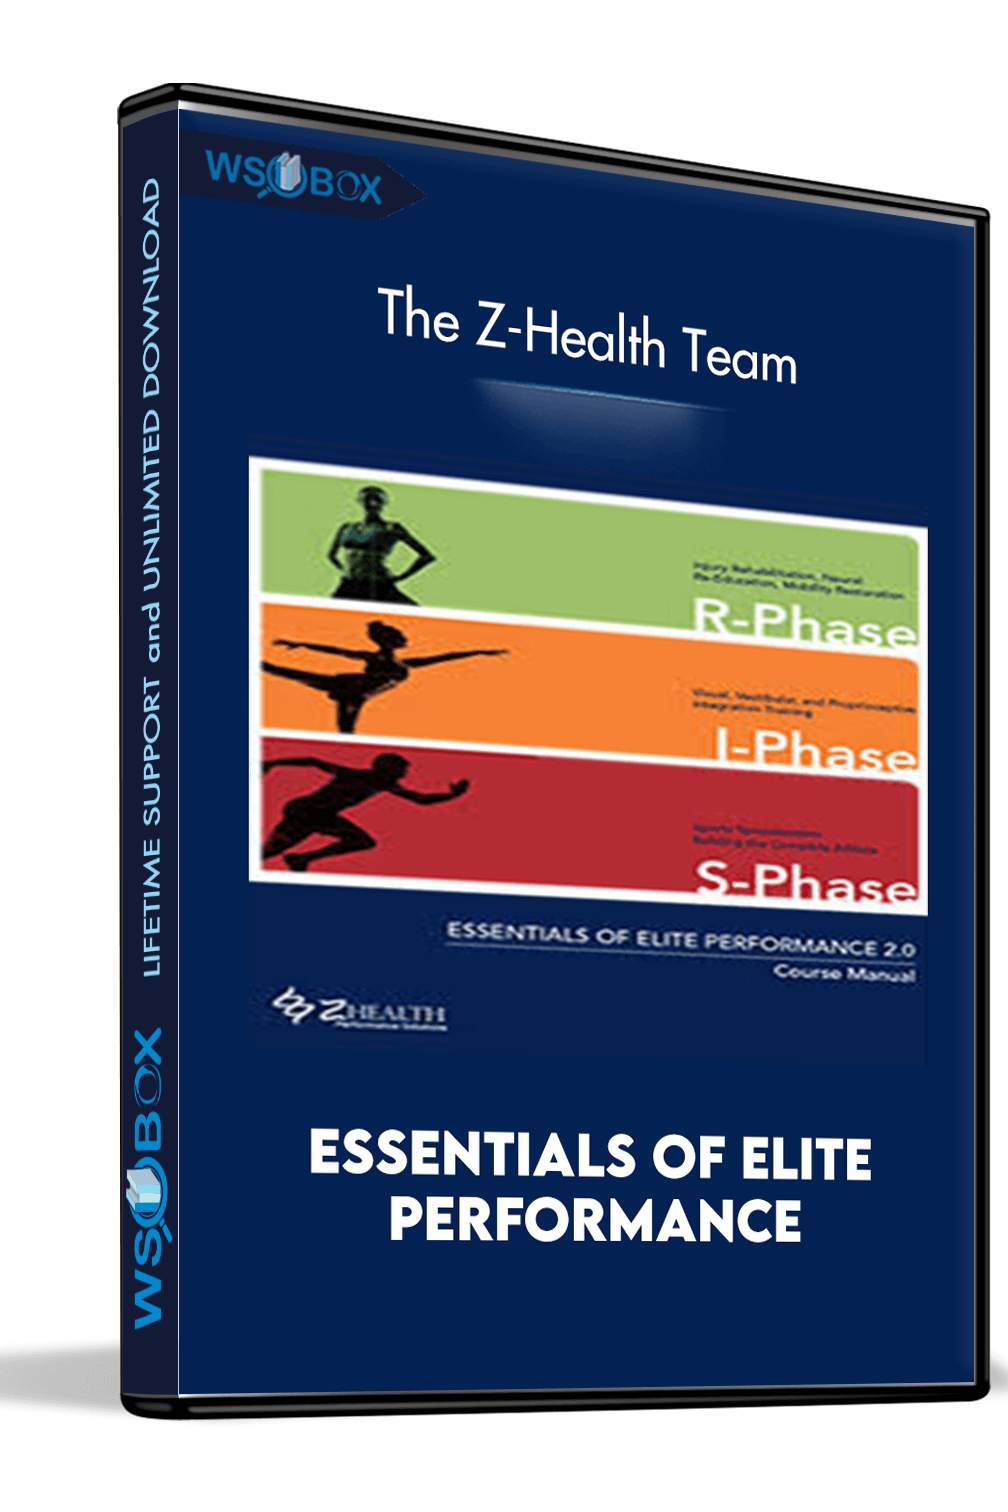 Essentials of Elite Performance  – The Z-Health Team